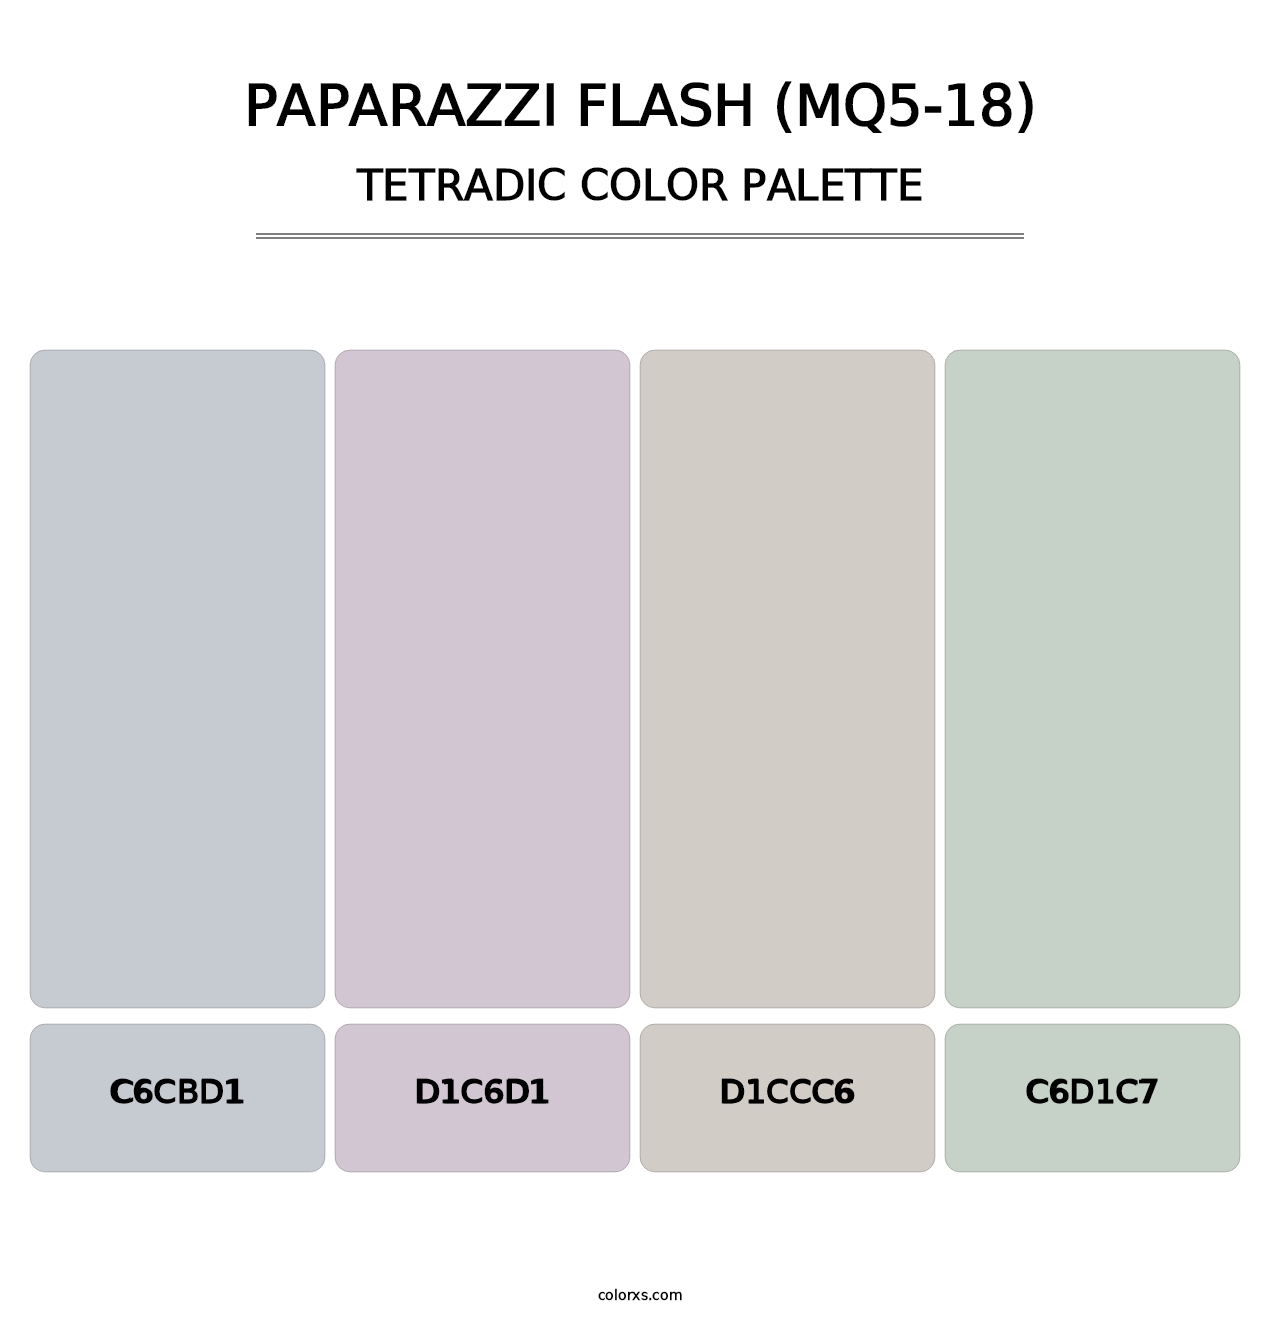 Paparazzi Flash (MQ5-18) - Tetradic Color Palette